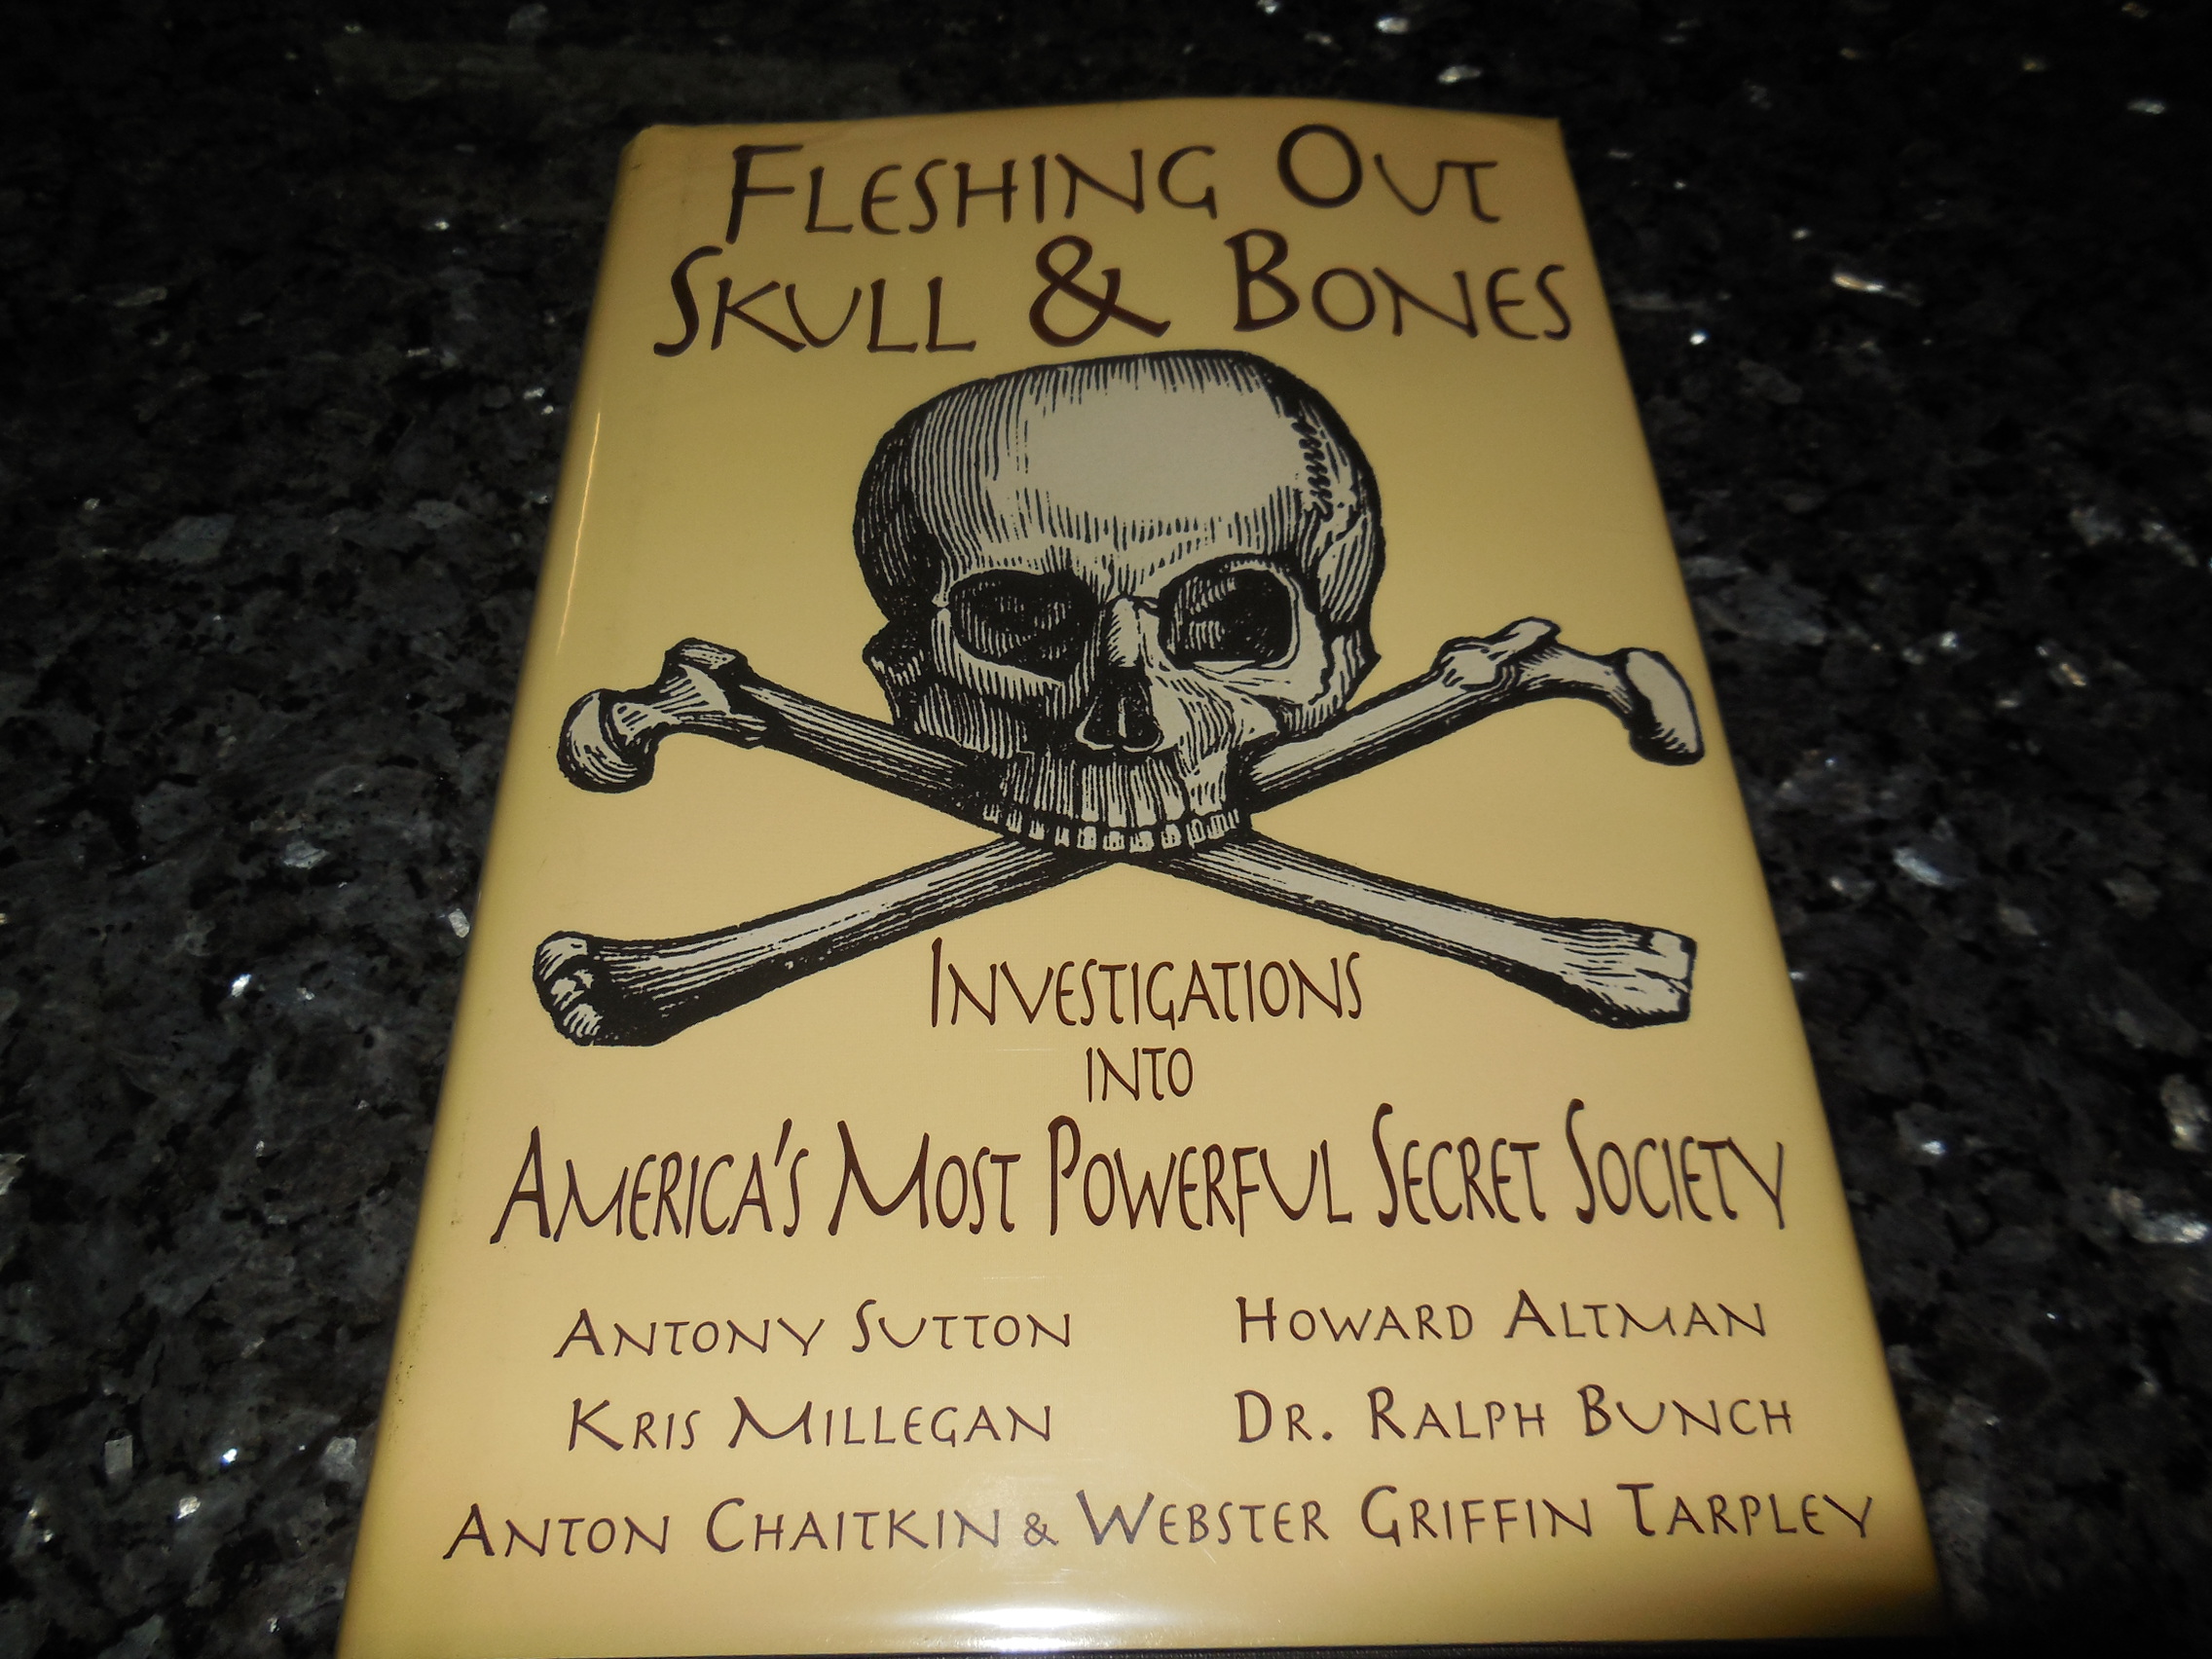 skull and bones society